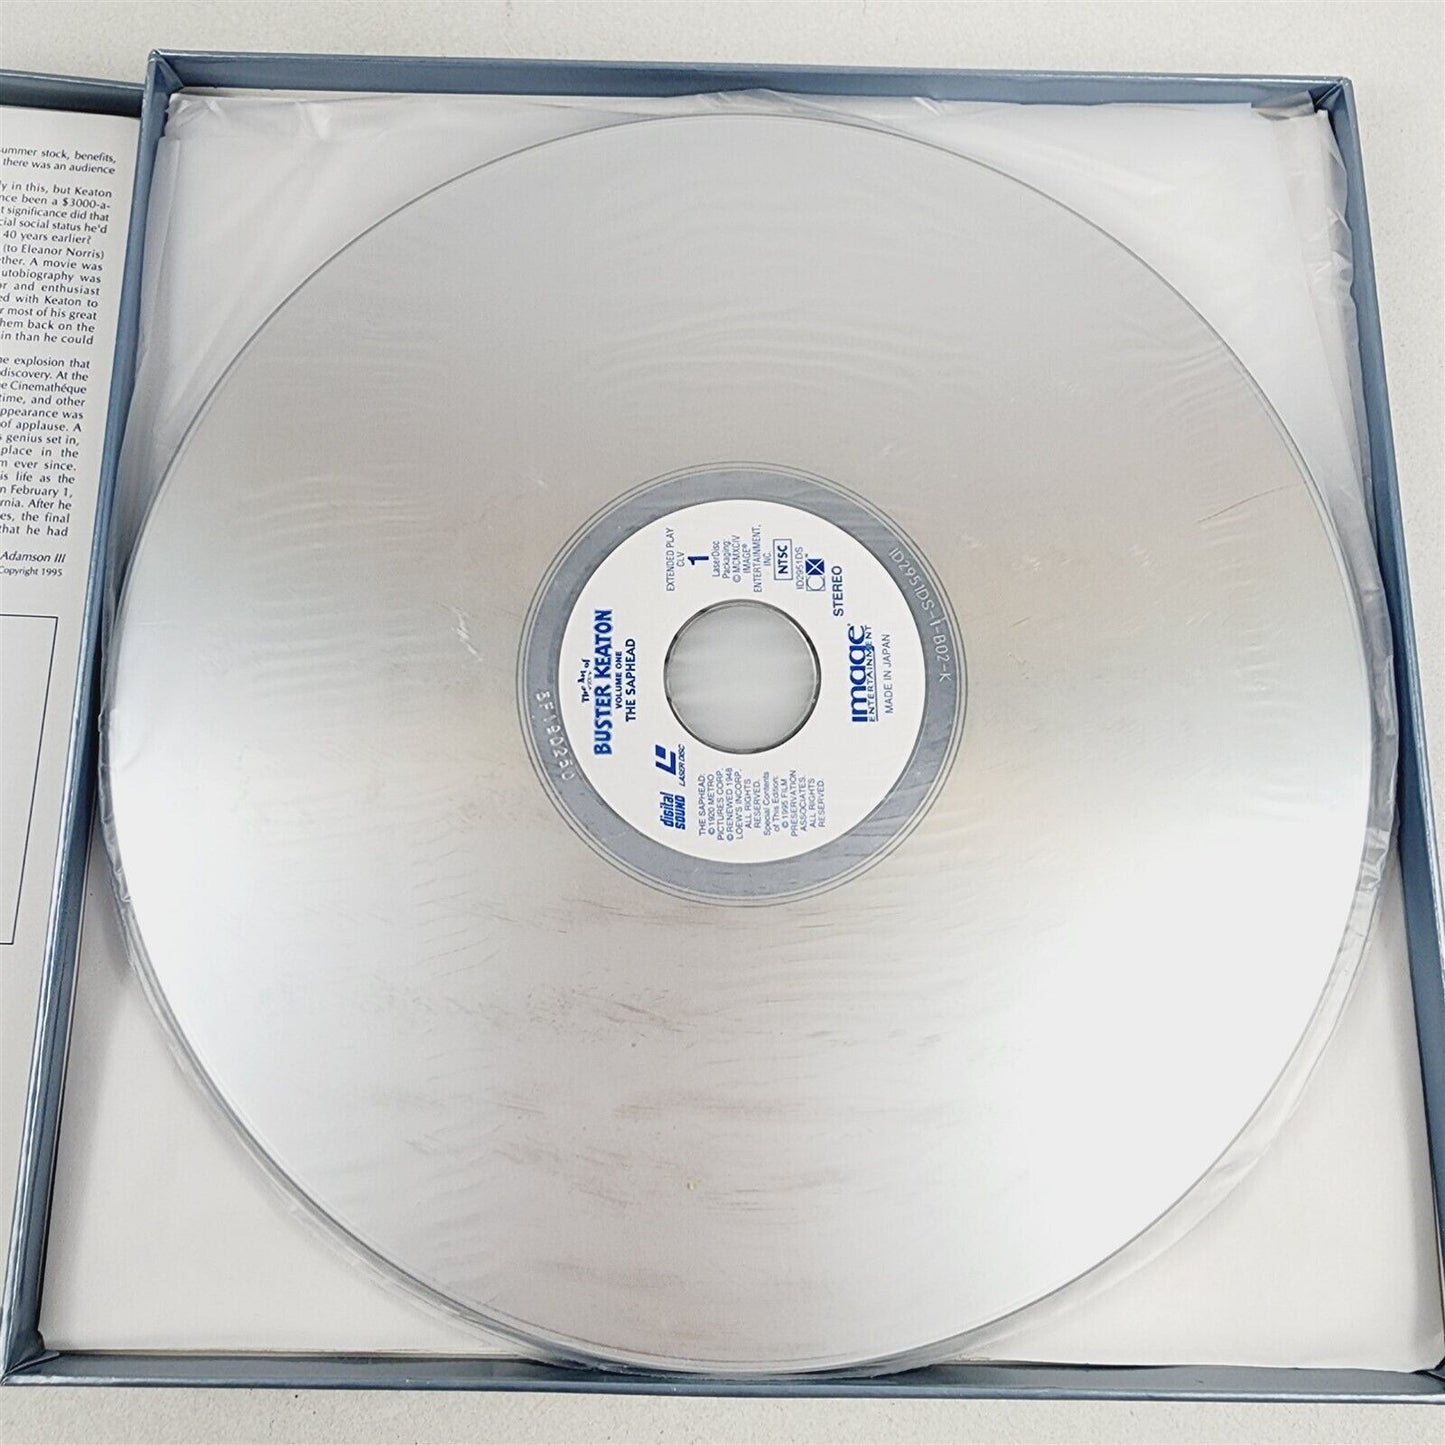 Art of Buster Keaton Laserdisc Volume One - 3 Disc Boxed Set